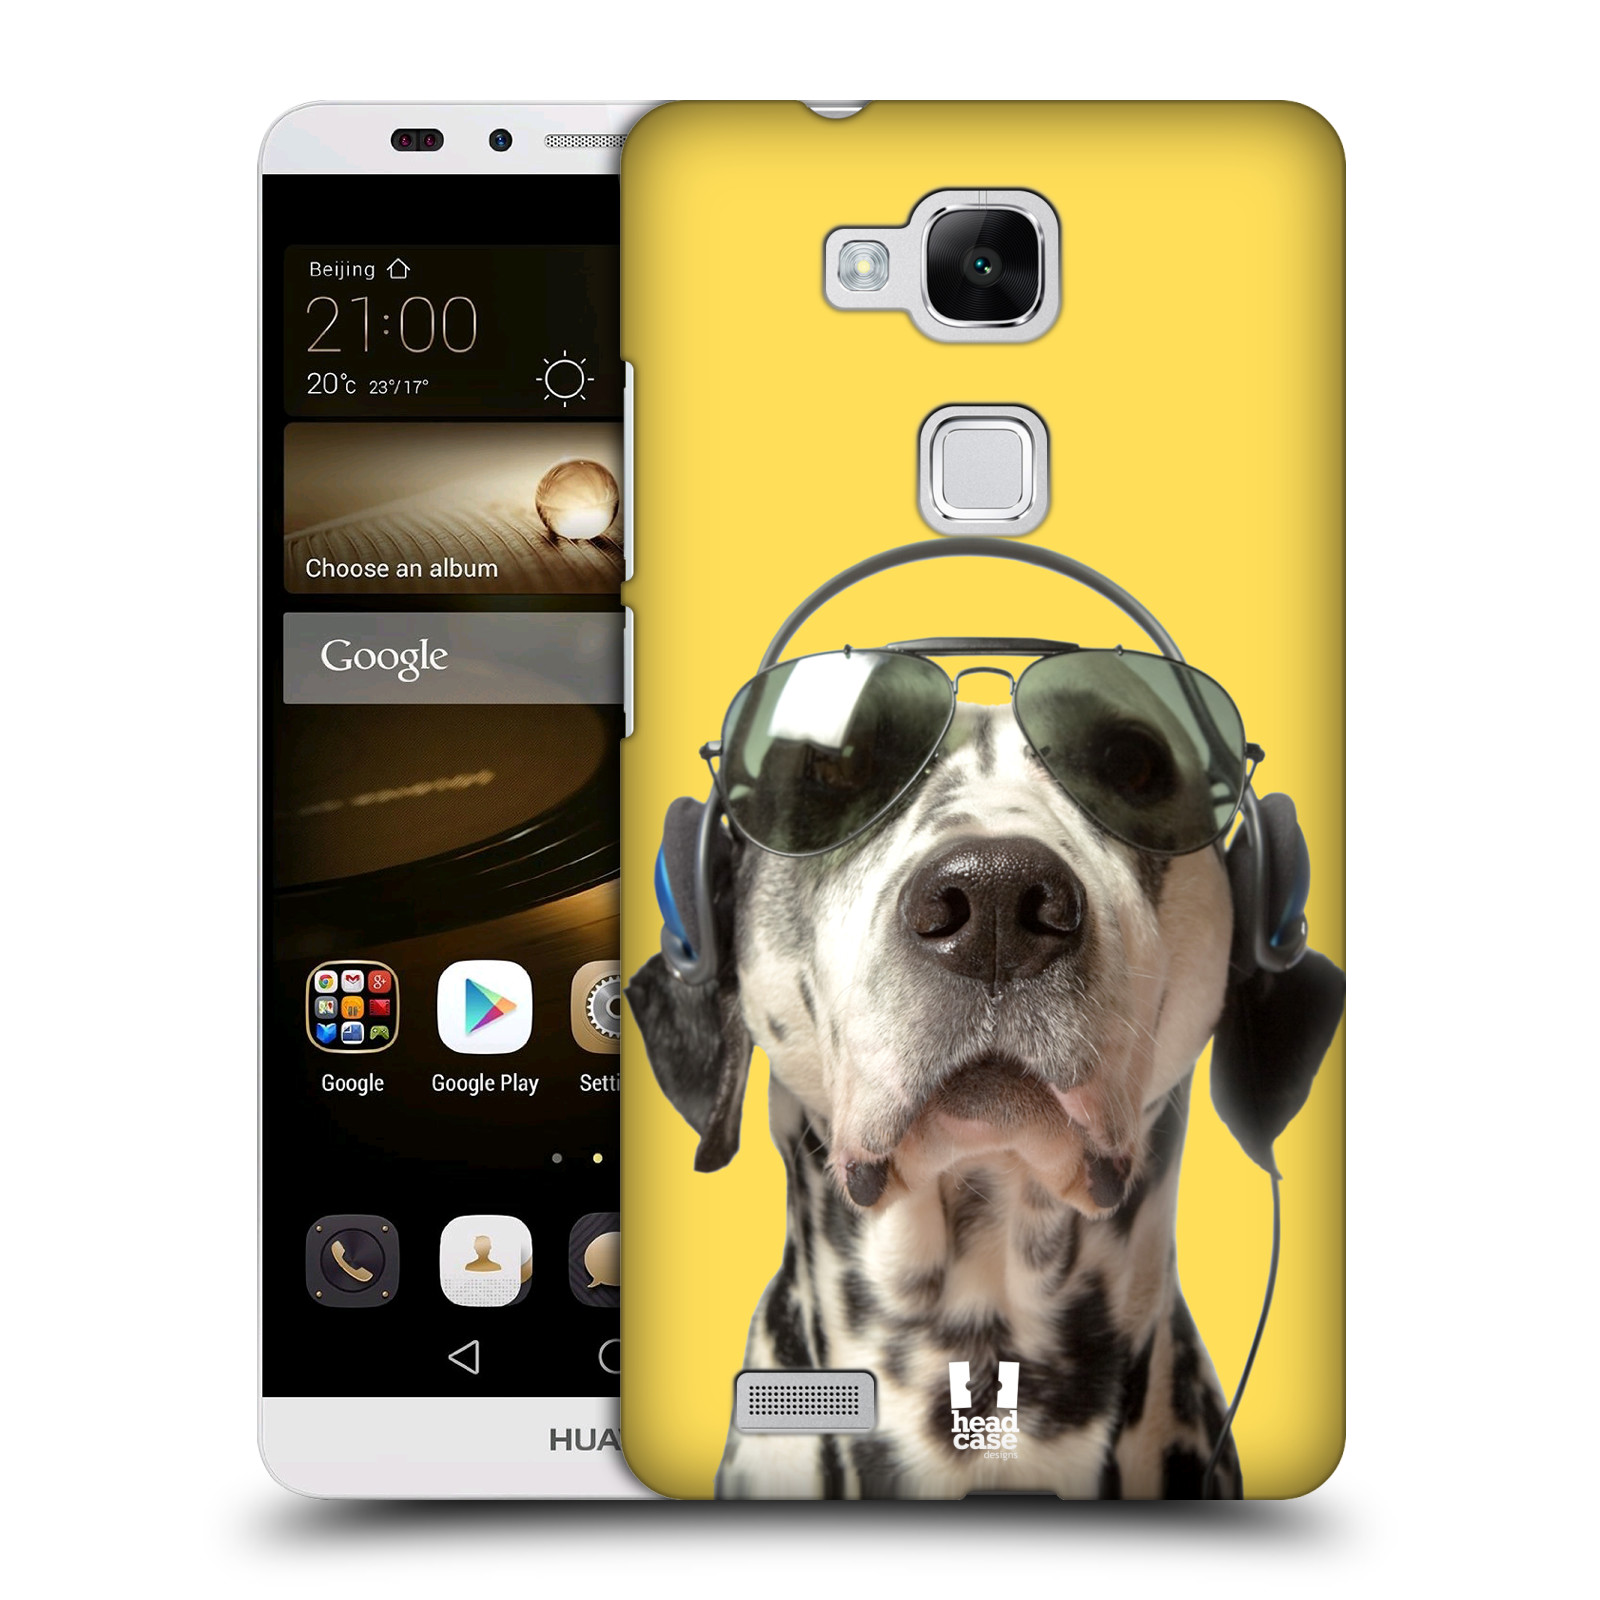 HEAD CASE plastový obal na mobil Huawei Mate 7 vzor Legrační zvířátka dalmatin se sluchátky žlutá